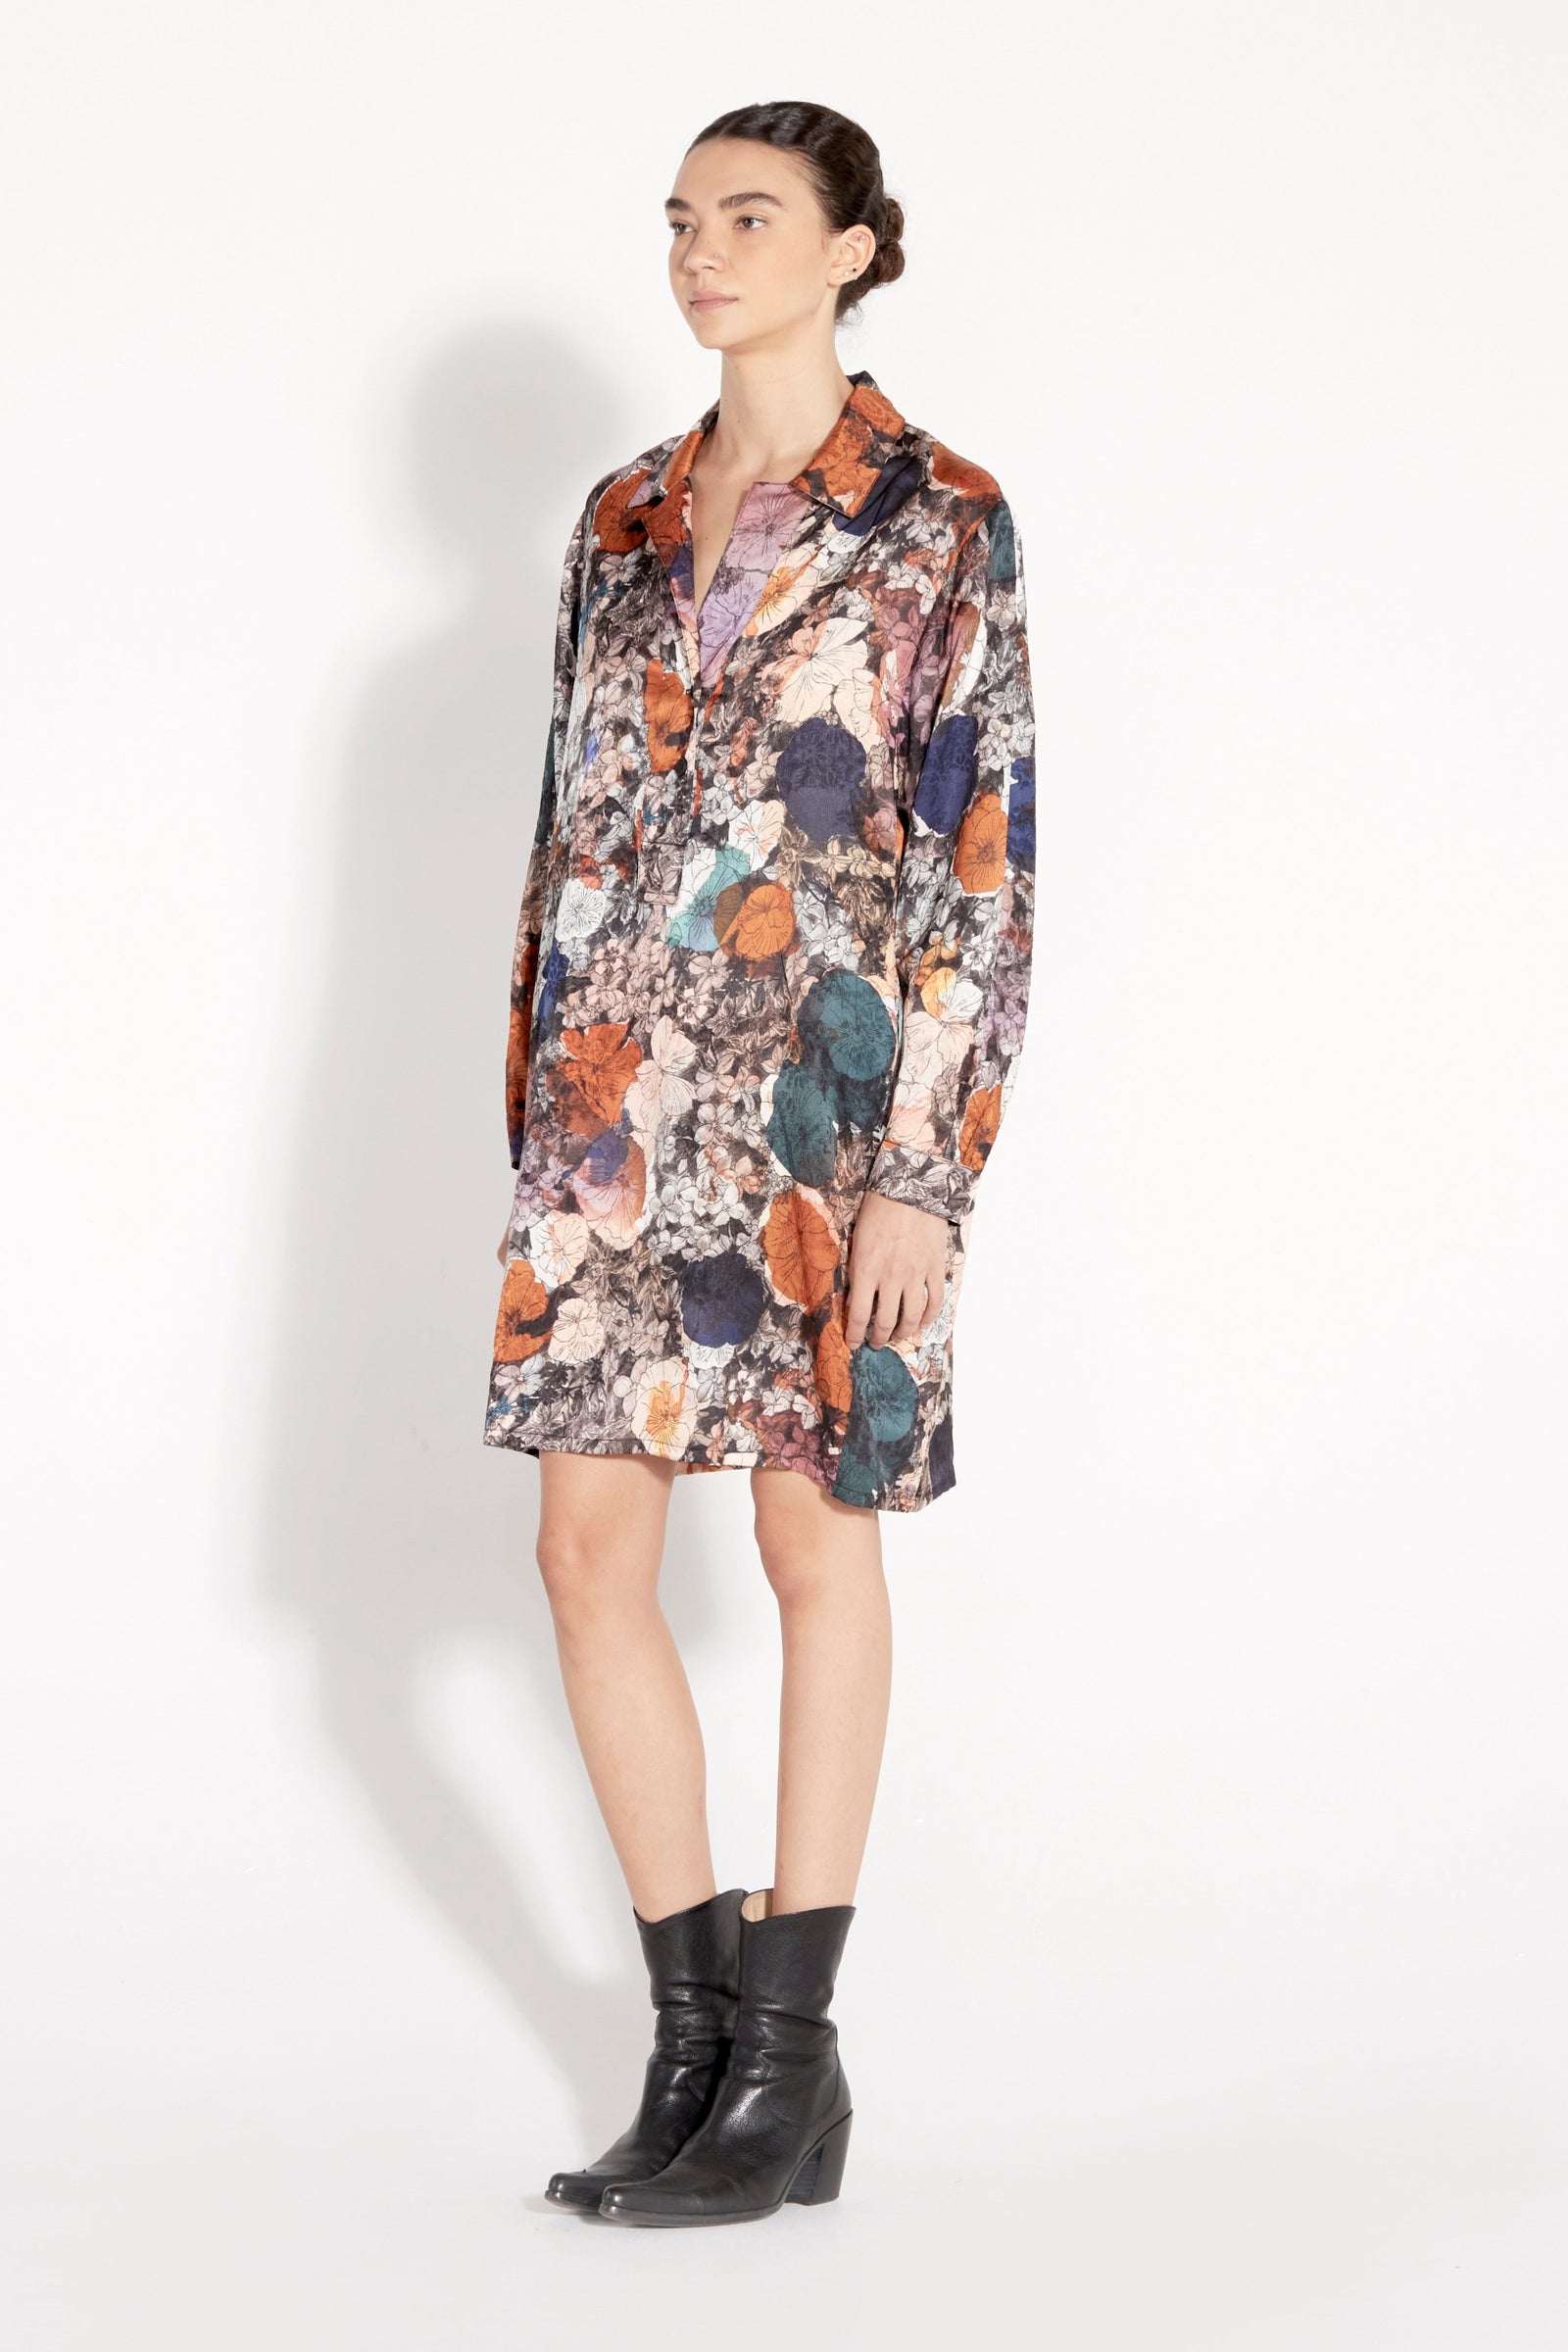 Flower Medley Print Silk Jacquard Brooke Dress Full Side View